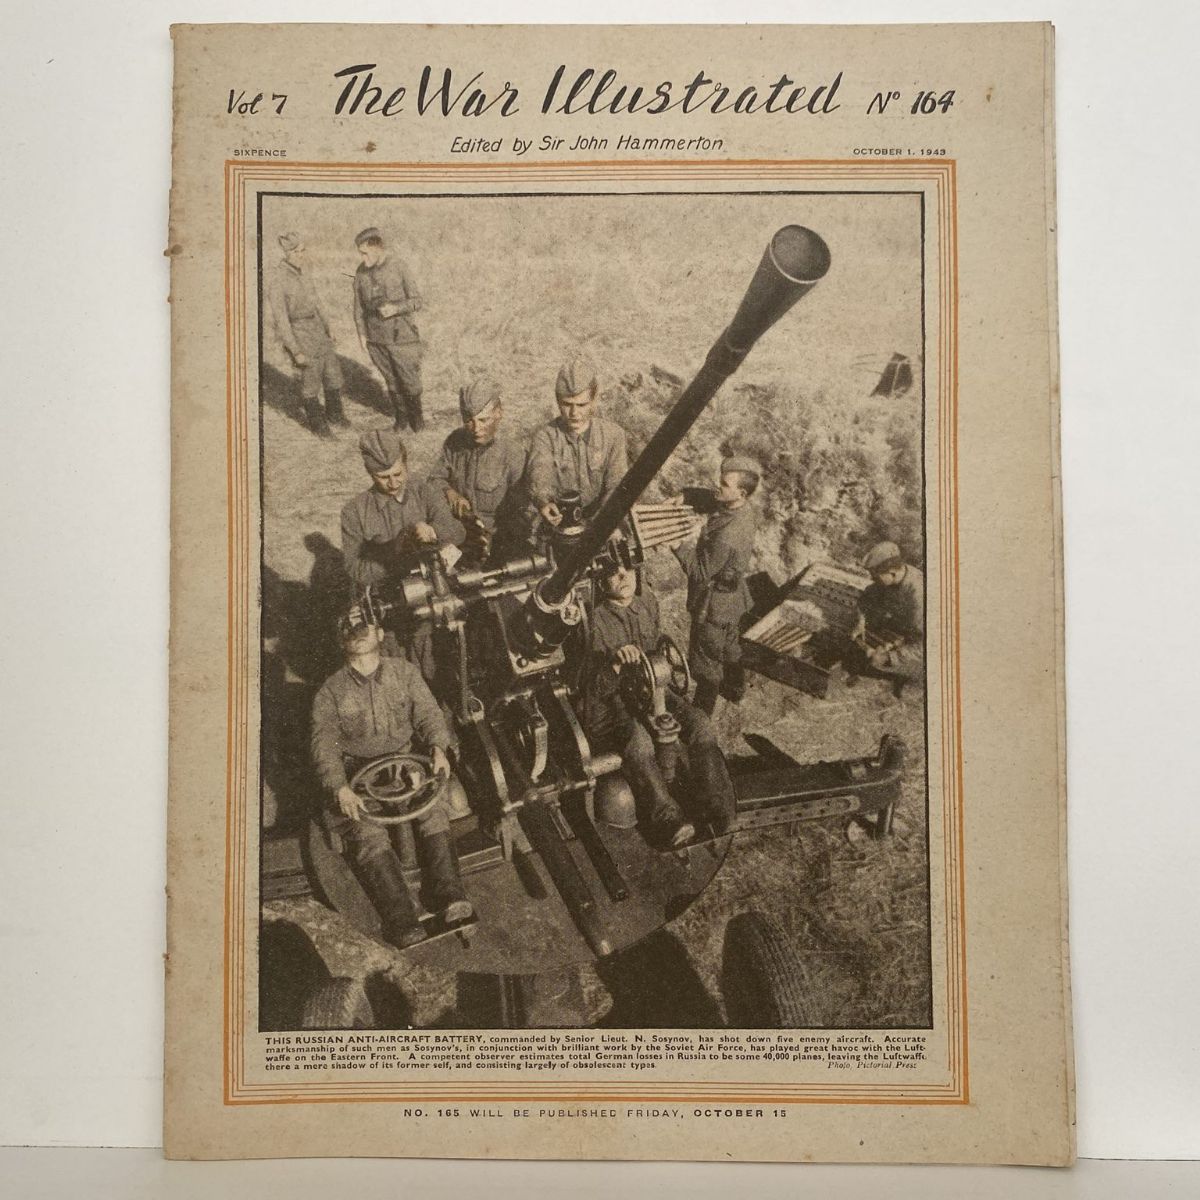 THE WAR ILLUSTRATED - Vol 7, No 164, 1st Oct 1943